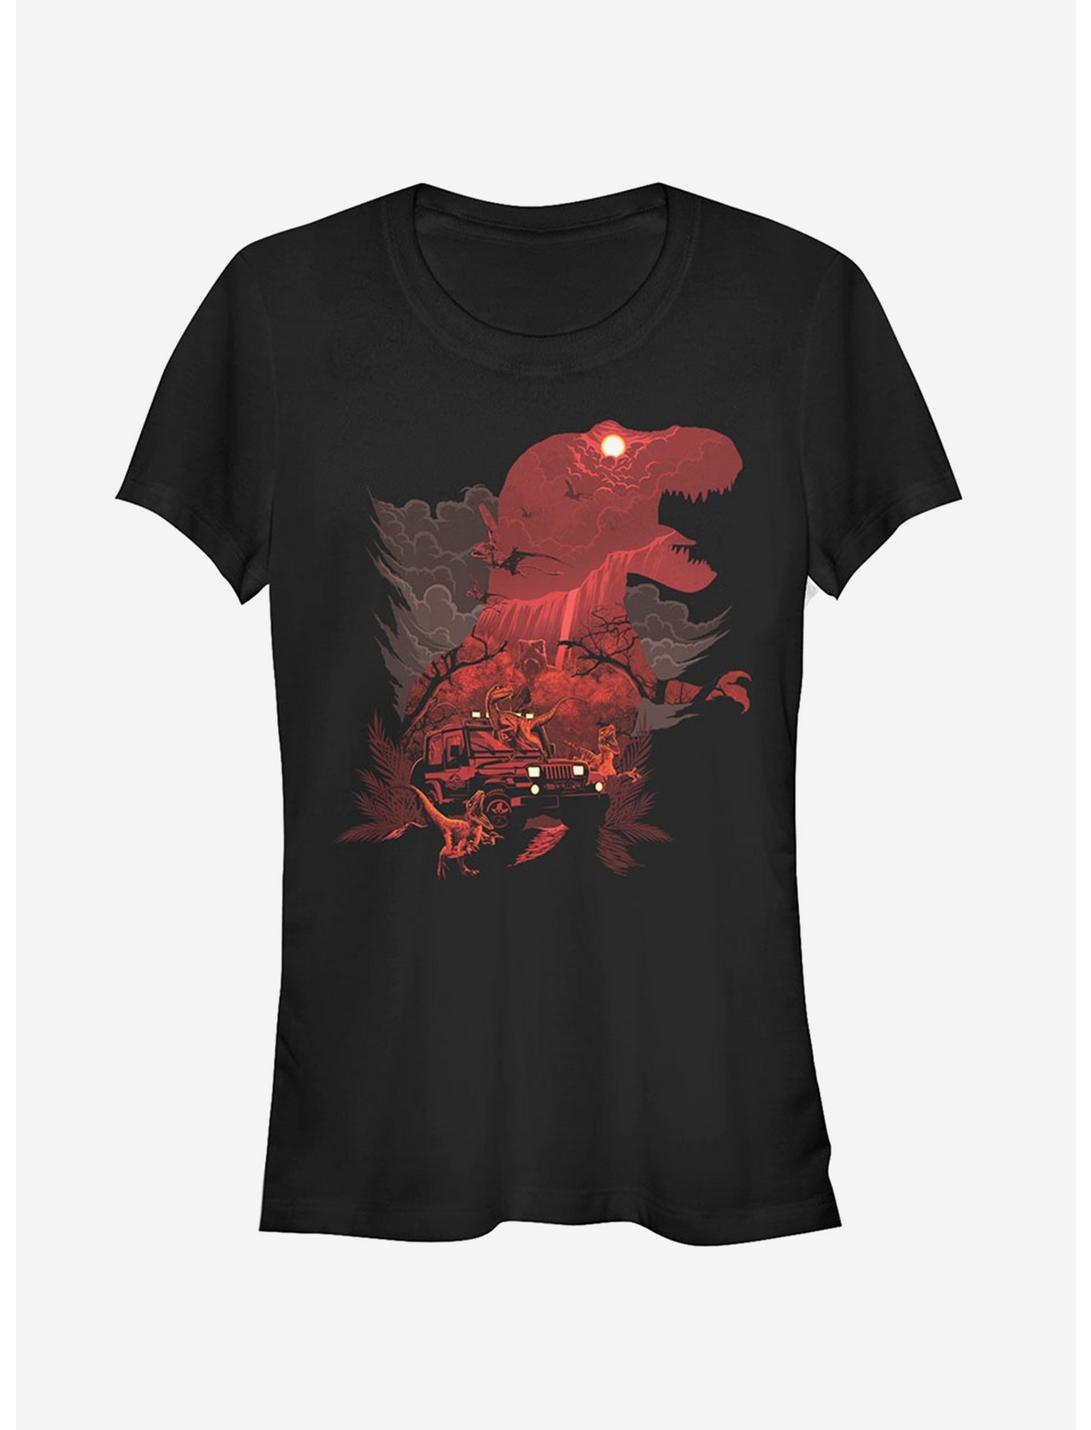 T. Rex Silhouette Girls T-Shirt, BLACK, hi-res